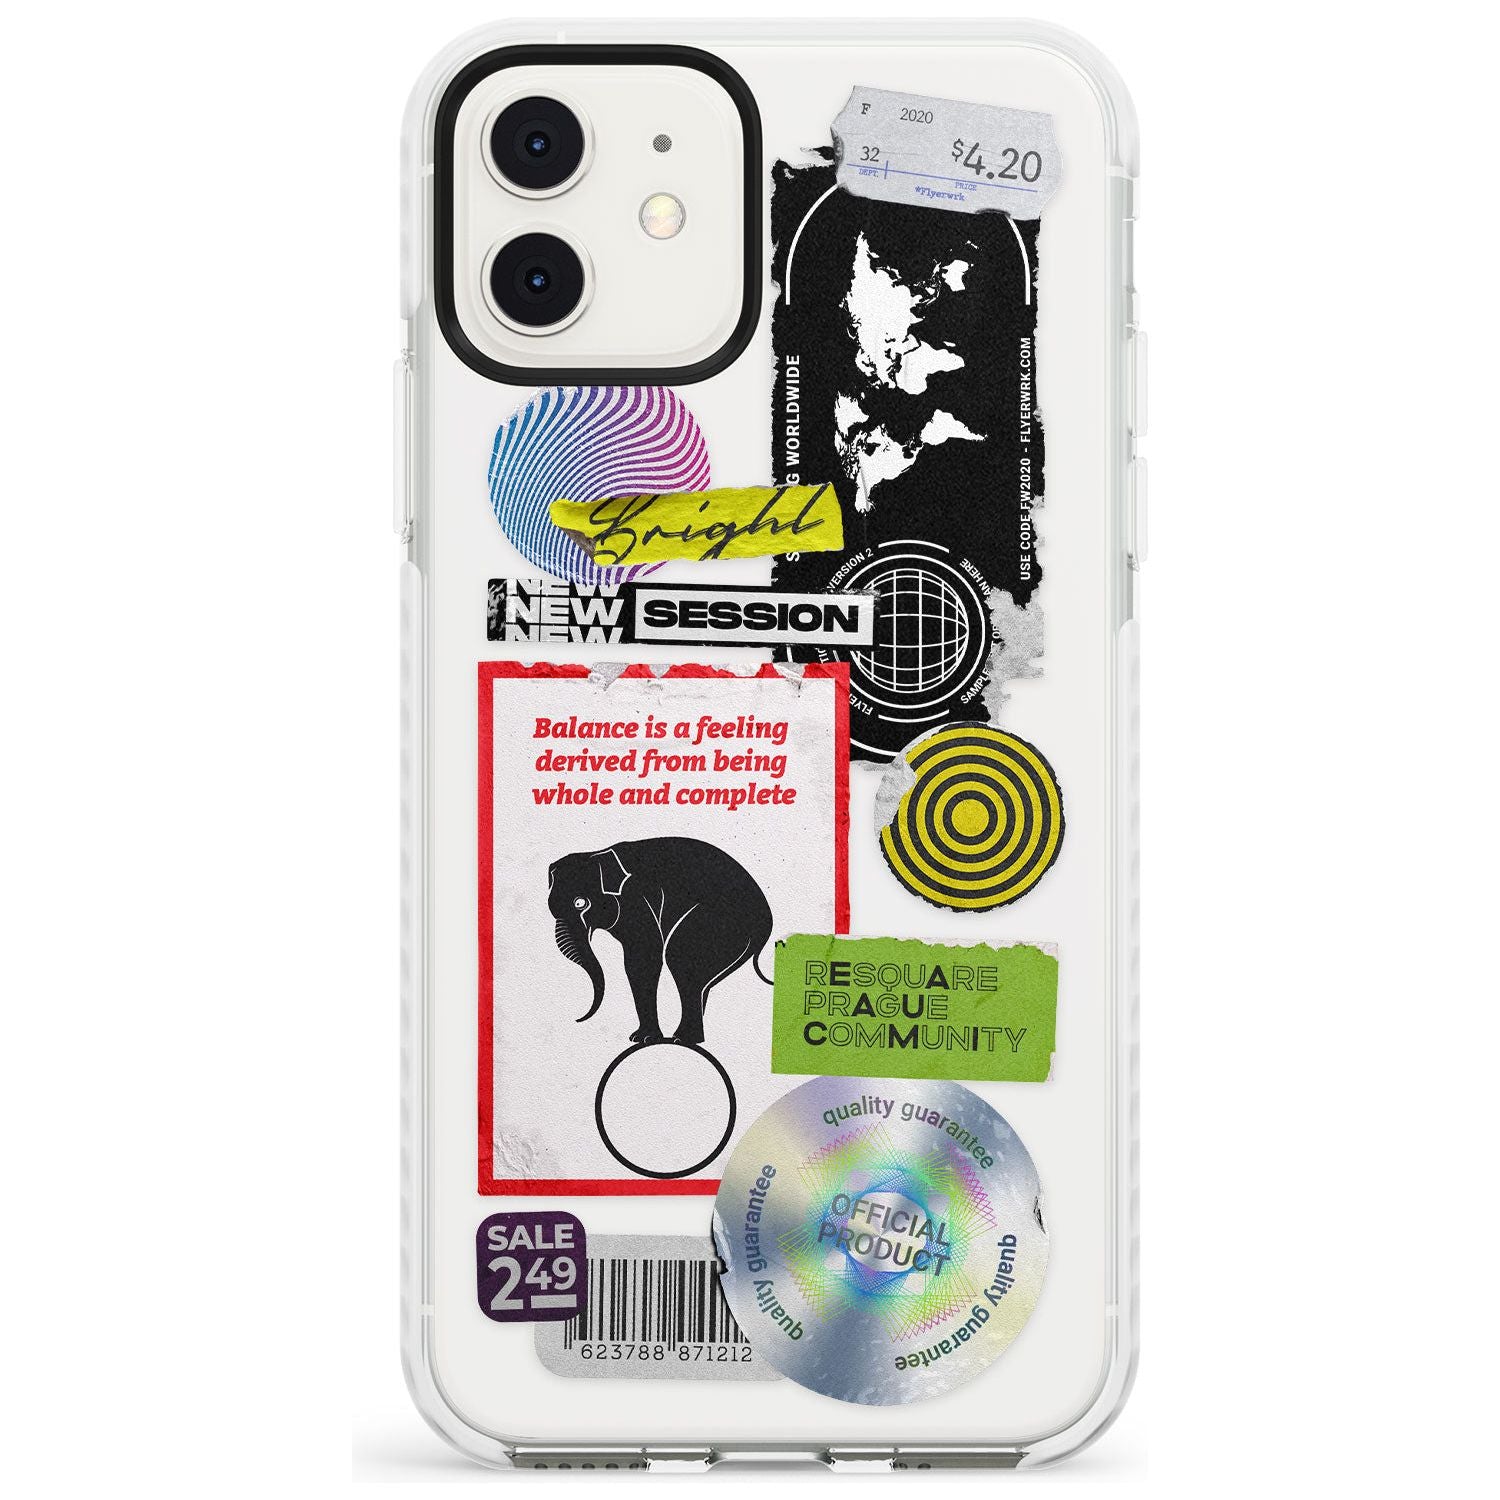 Peeled Sticker Mix Slim TPU Phone Case for iPhone 11